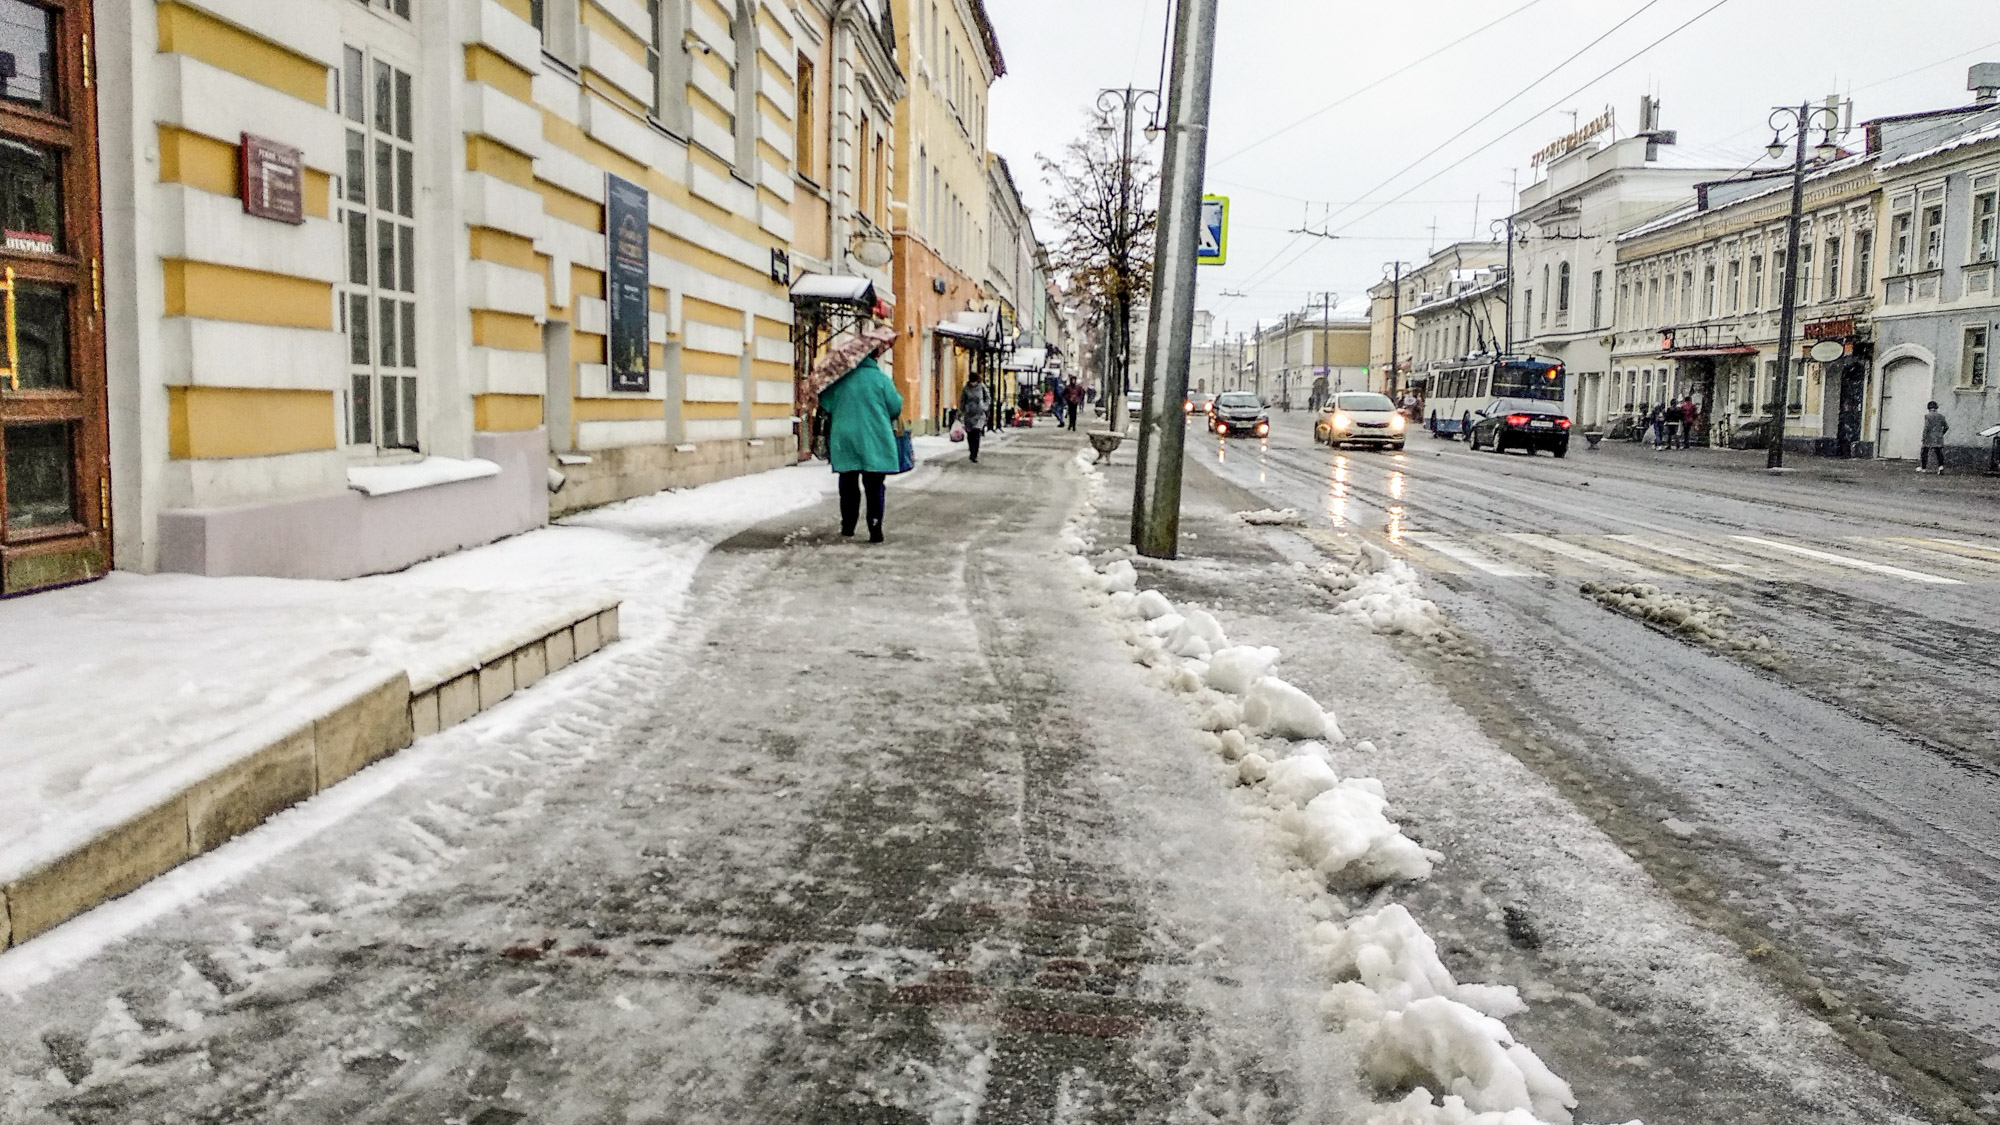 Дороги города владимира. Зимний тротуар. Снег на тротуаре. Заснеженный тротуар. Первый снег в городе.